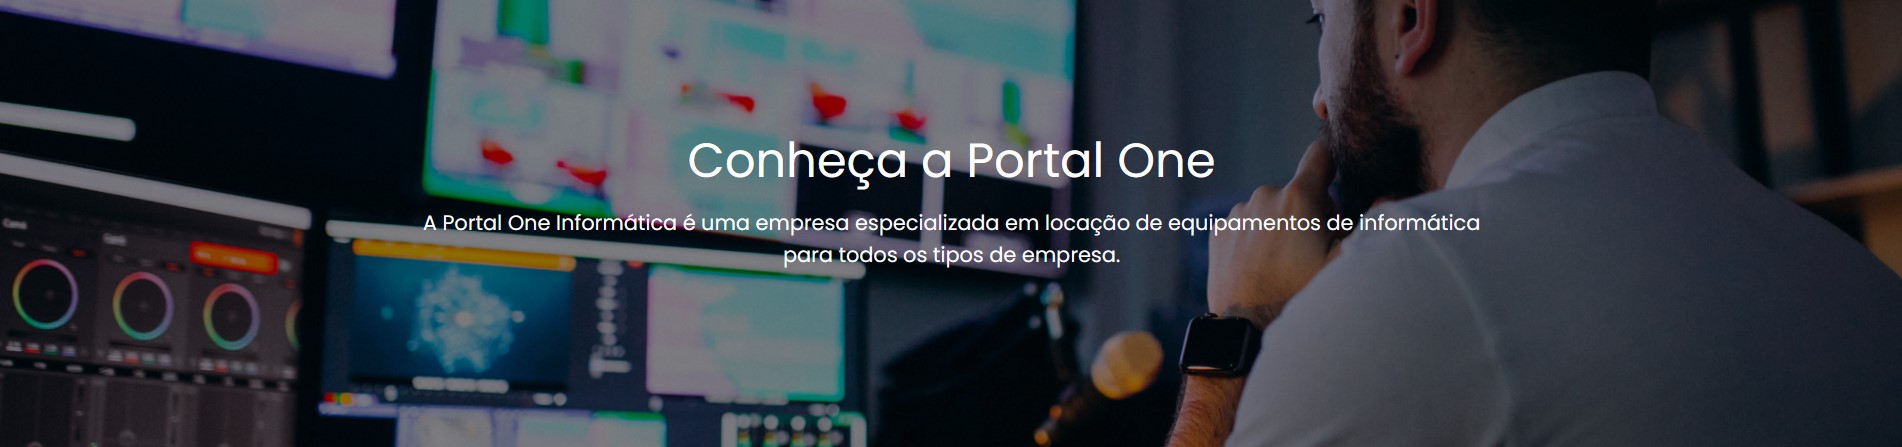 Conheça a Portal One